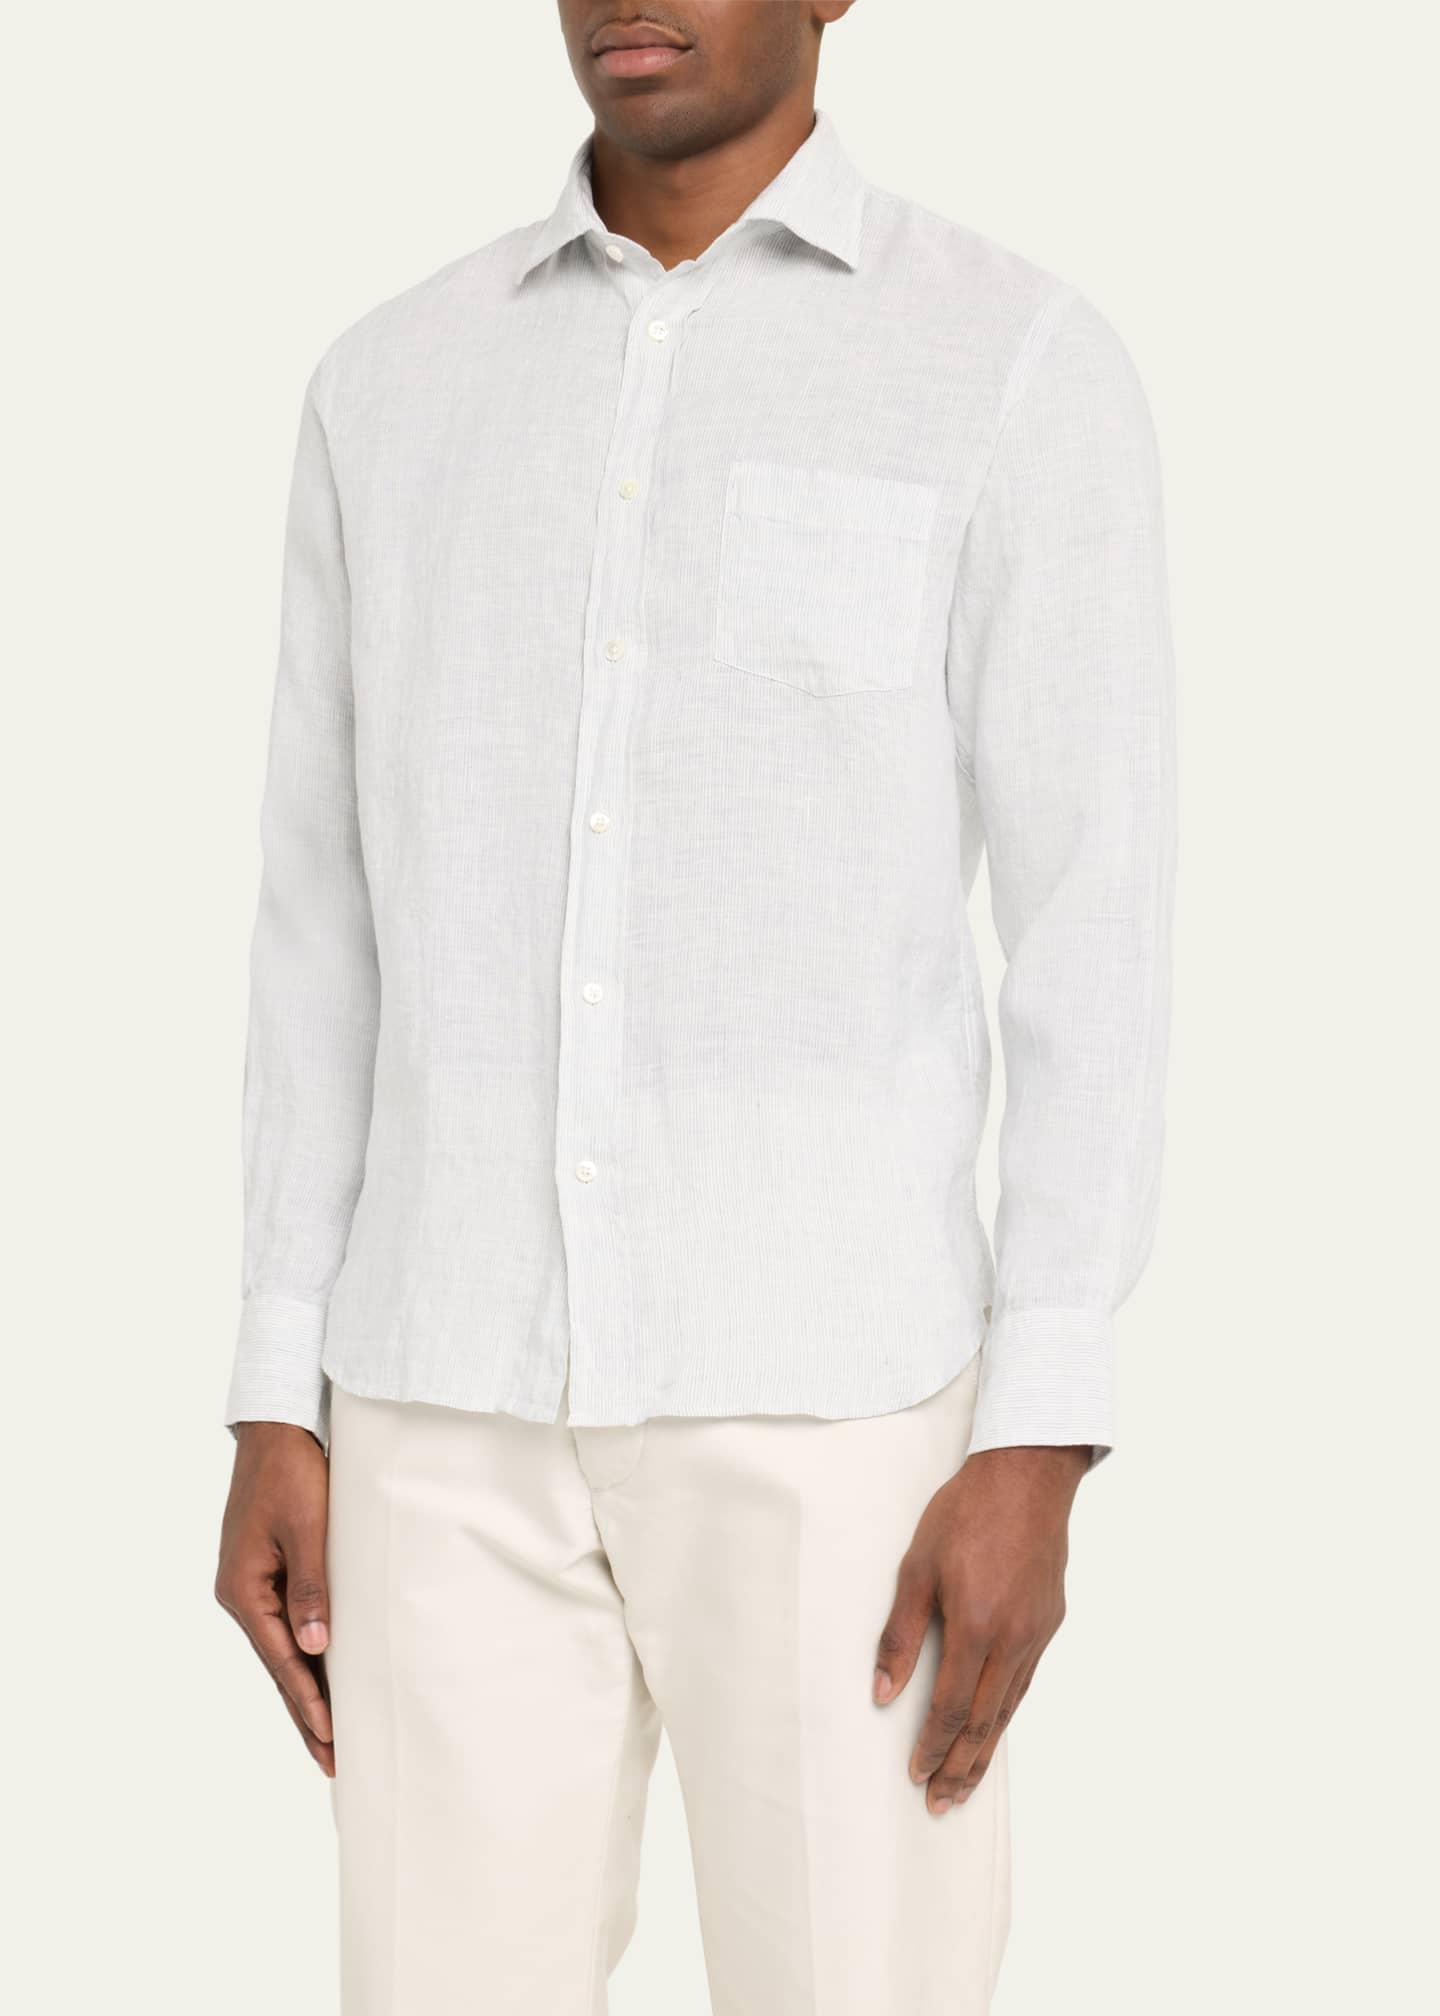 White linen shirt - Paul